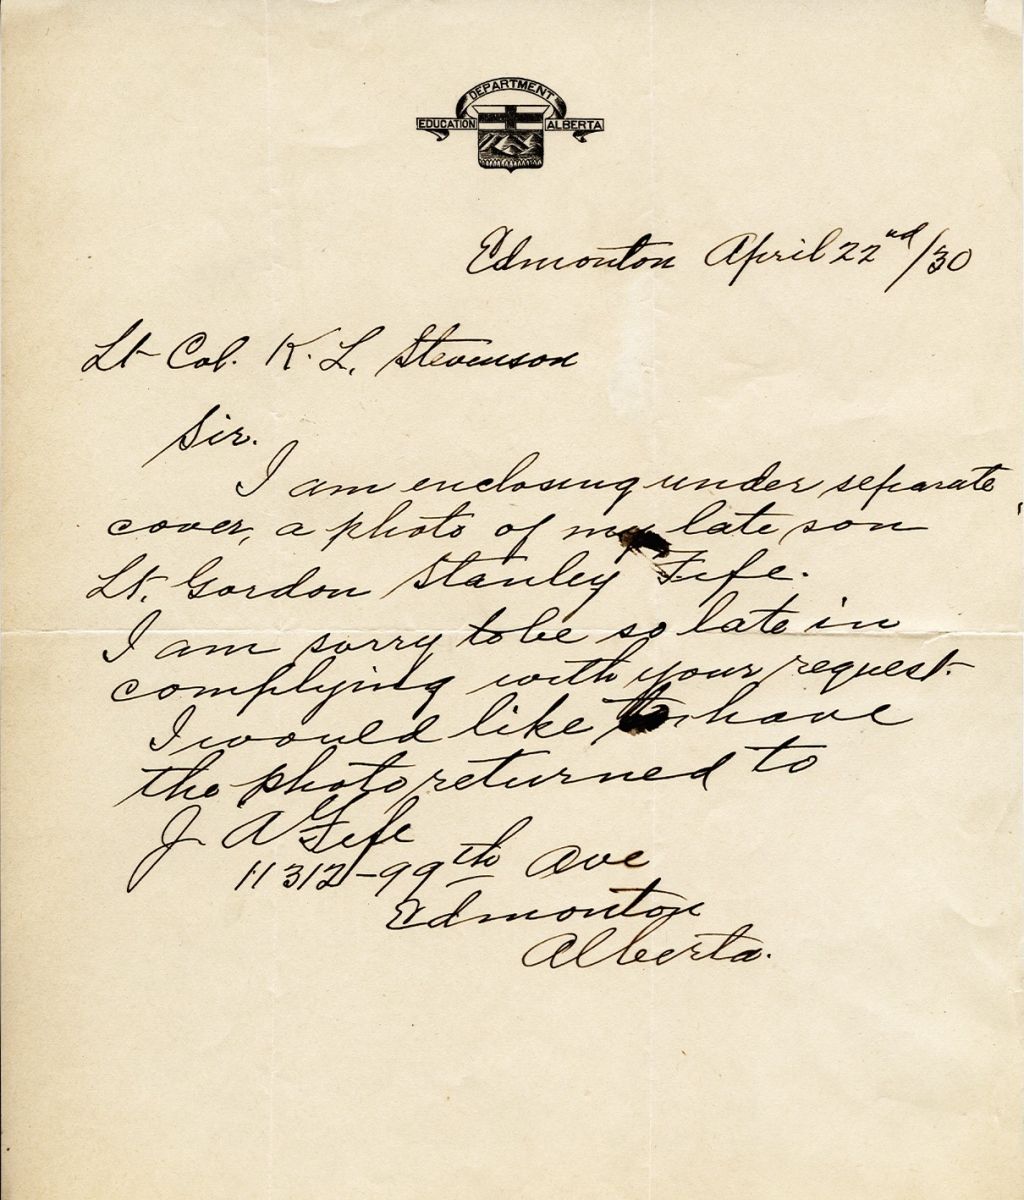 Letter from J.A. Fife to Lt. Col. K.L. Stevenson, 22nd April 1930